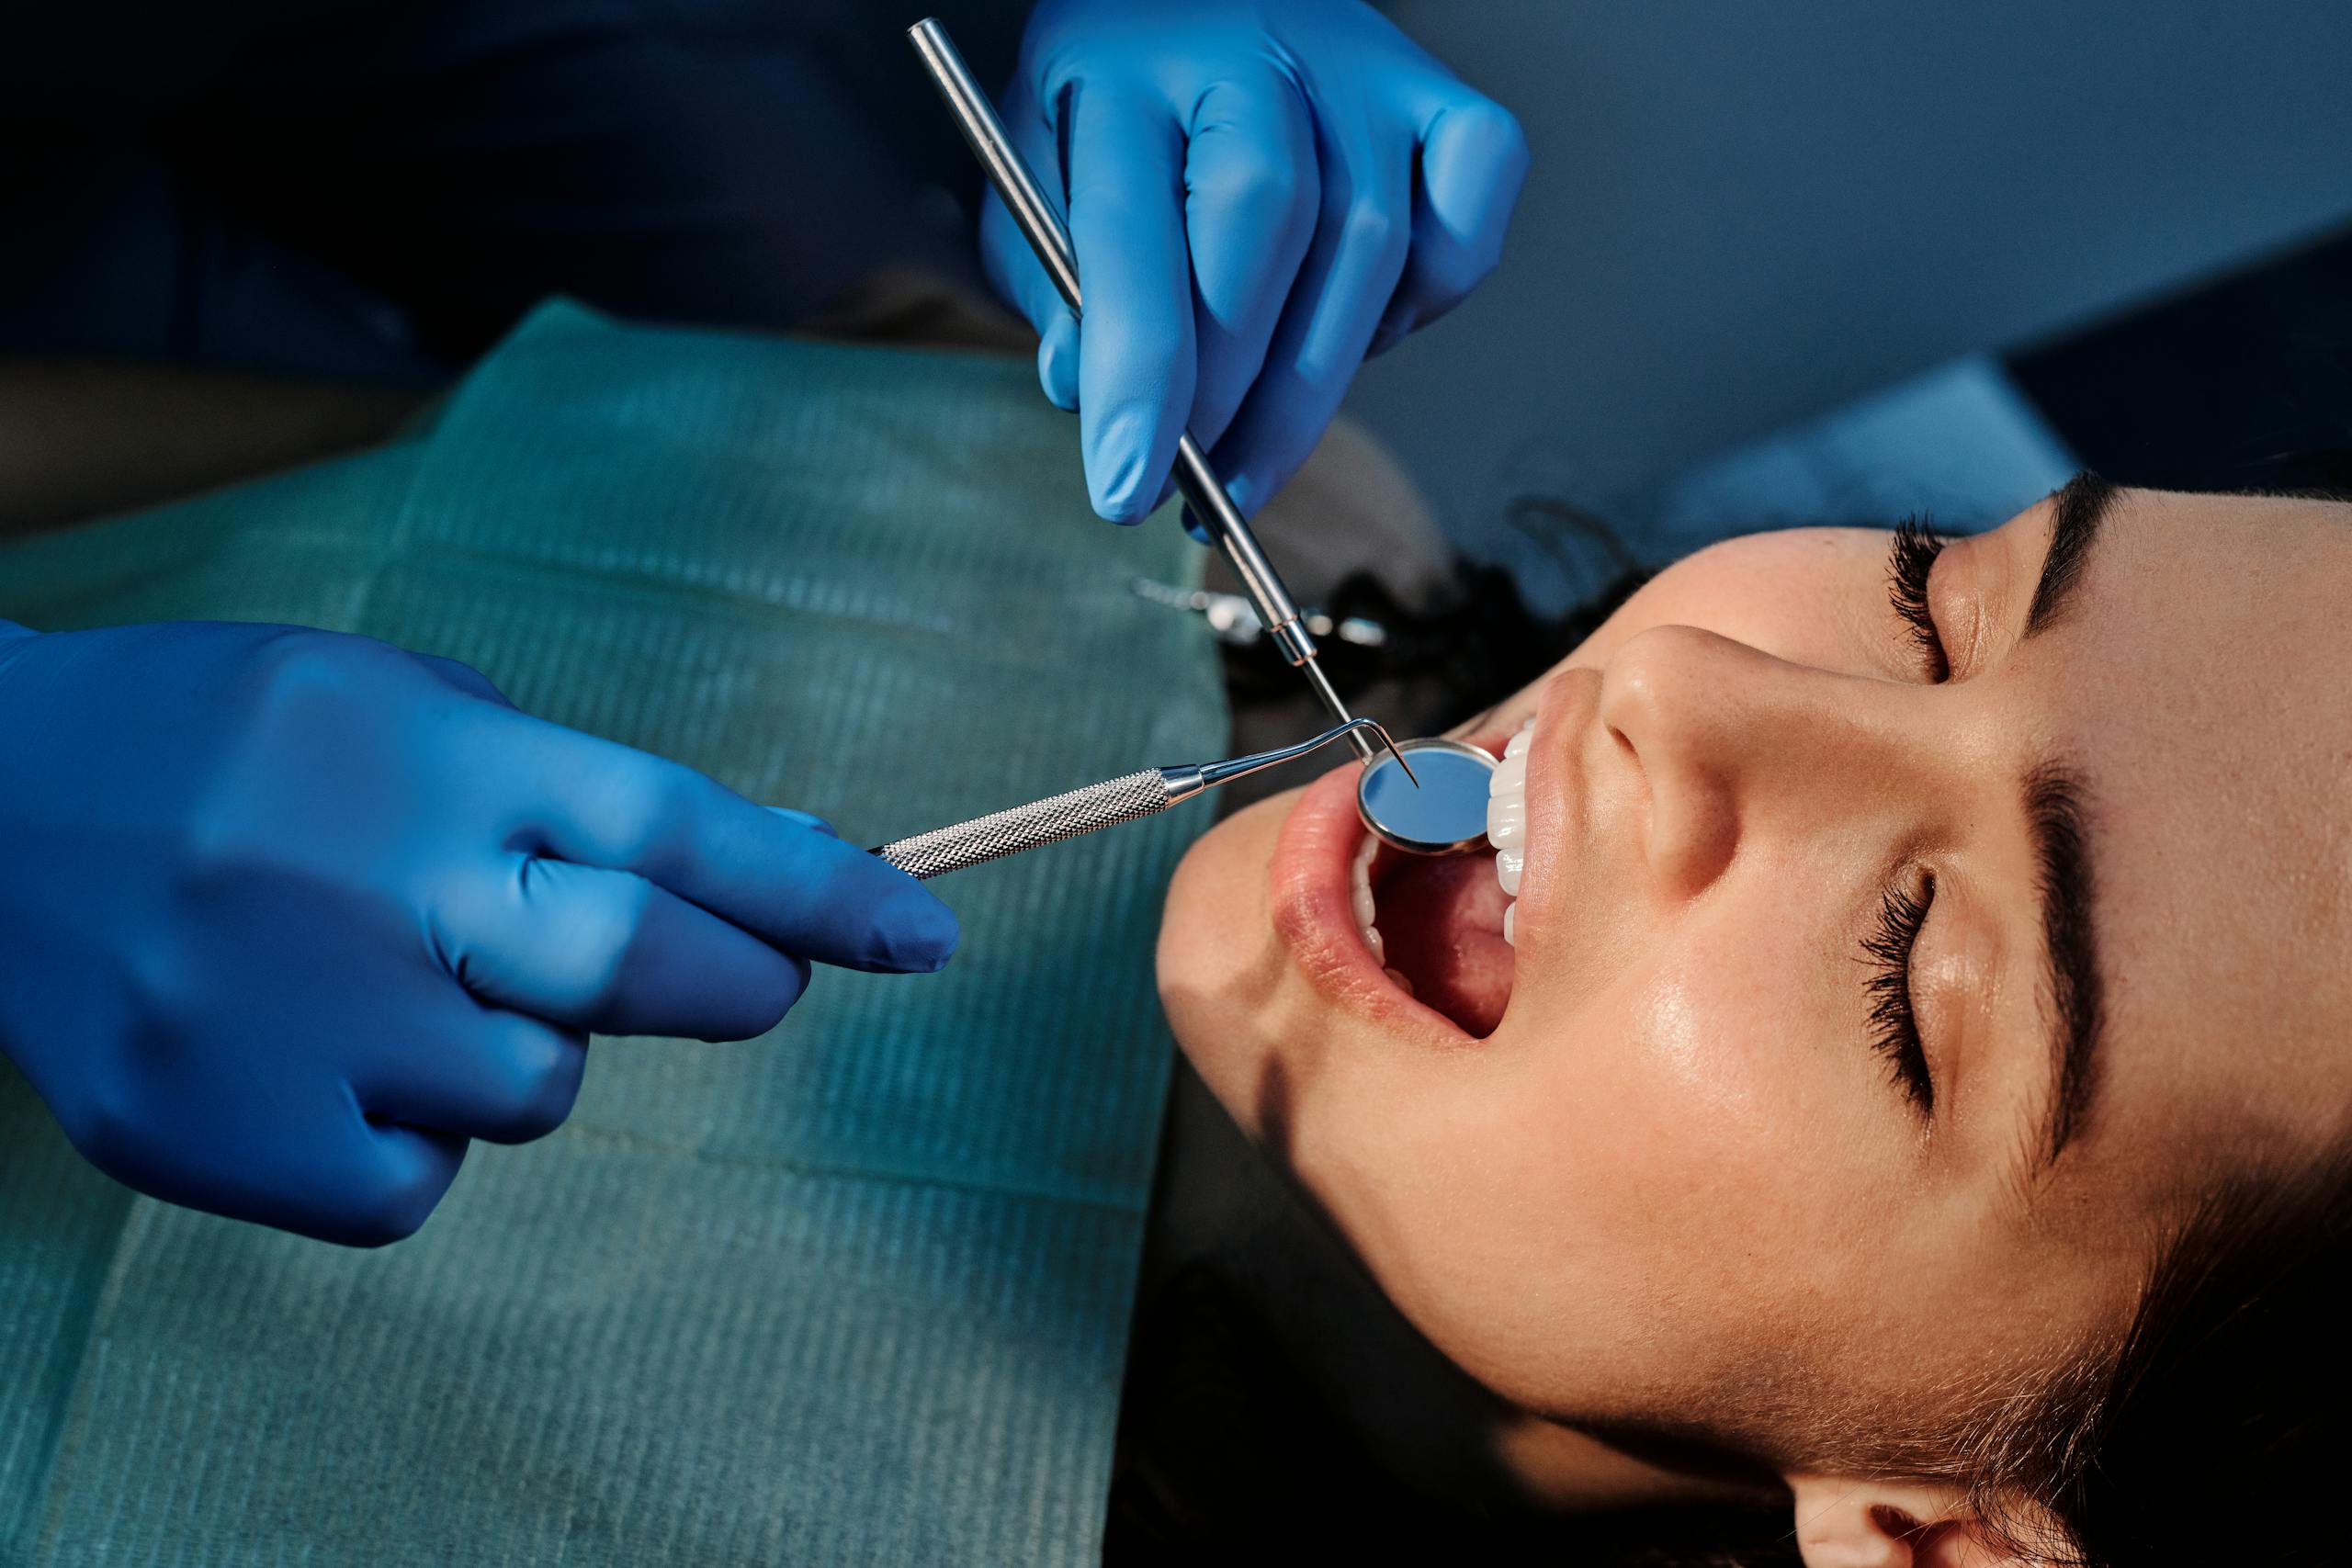 wisdom teeth removal - wisdom teeth removal sydney professionals - sydney